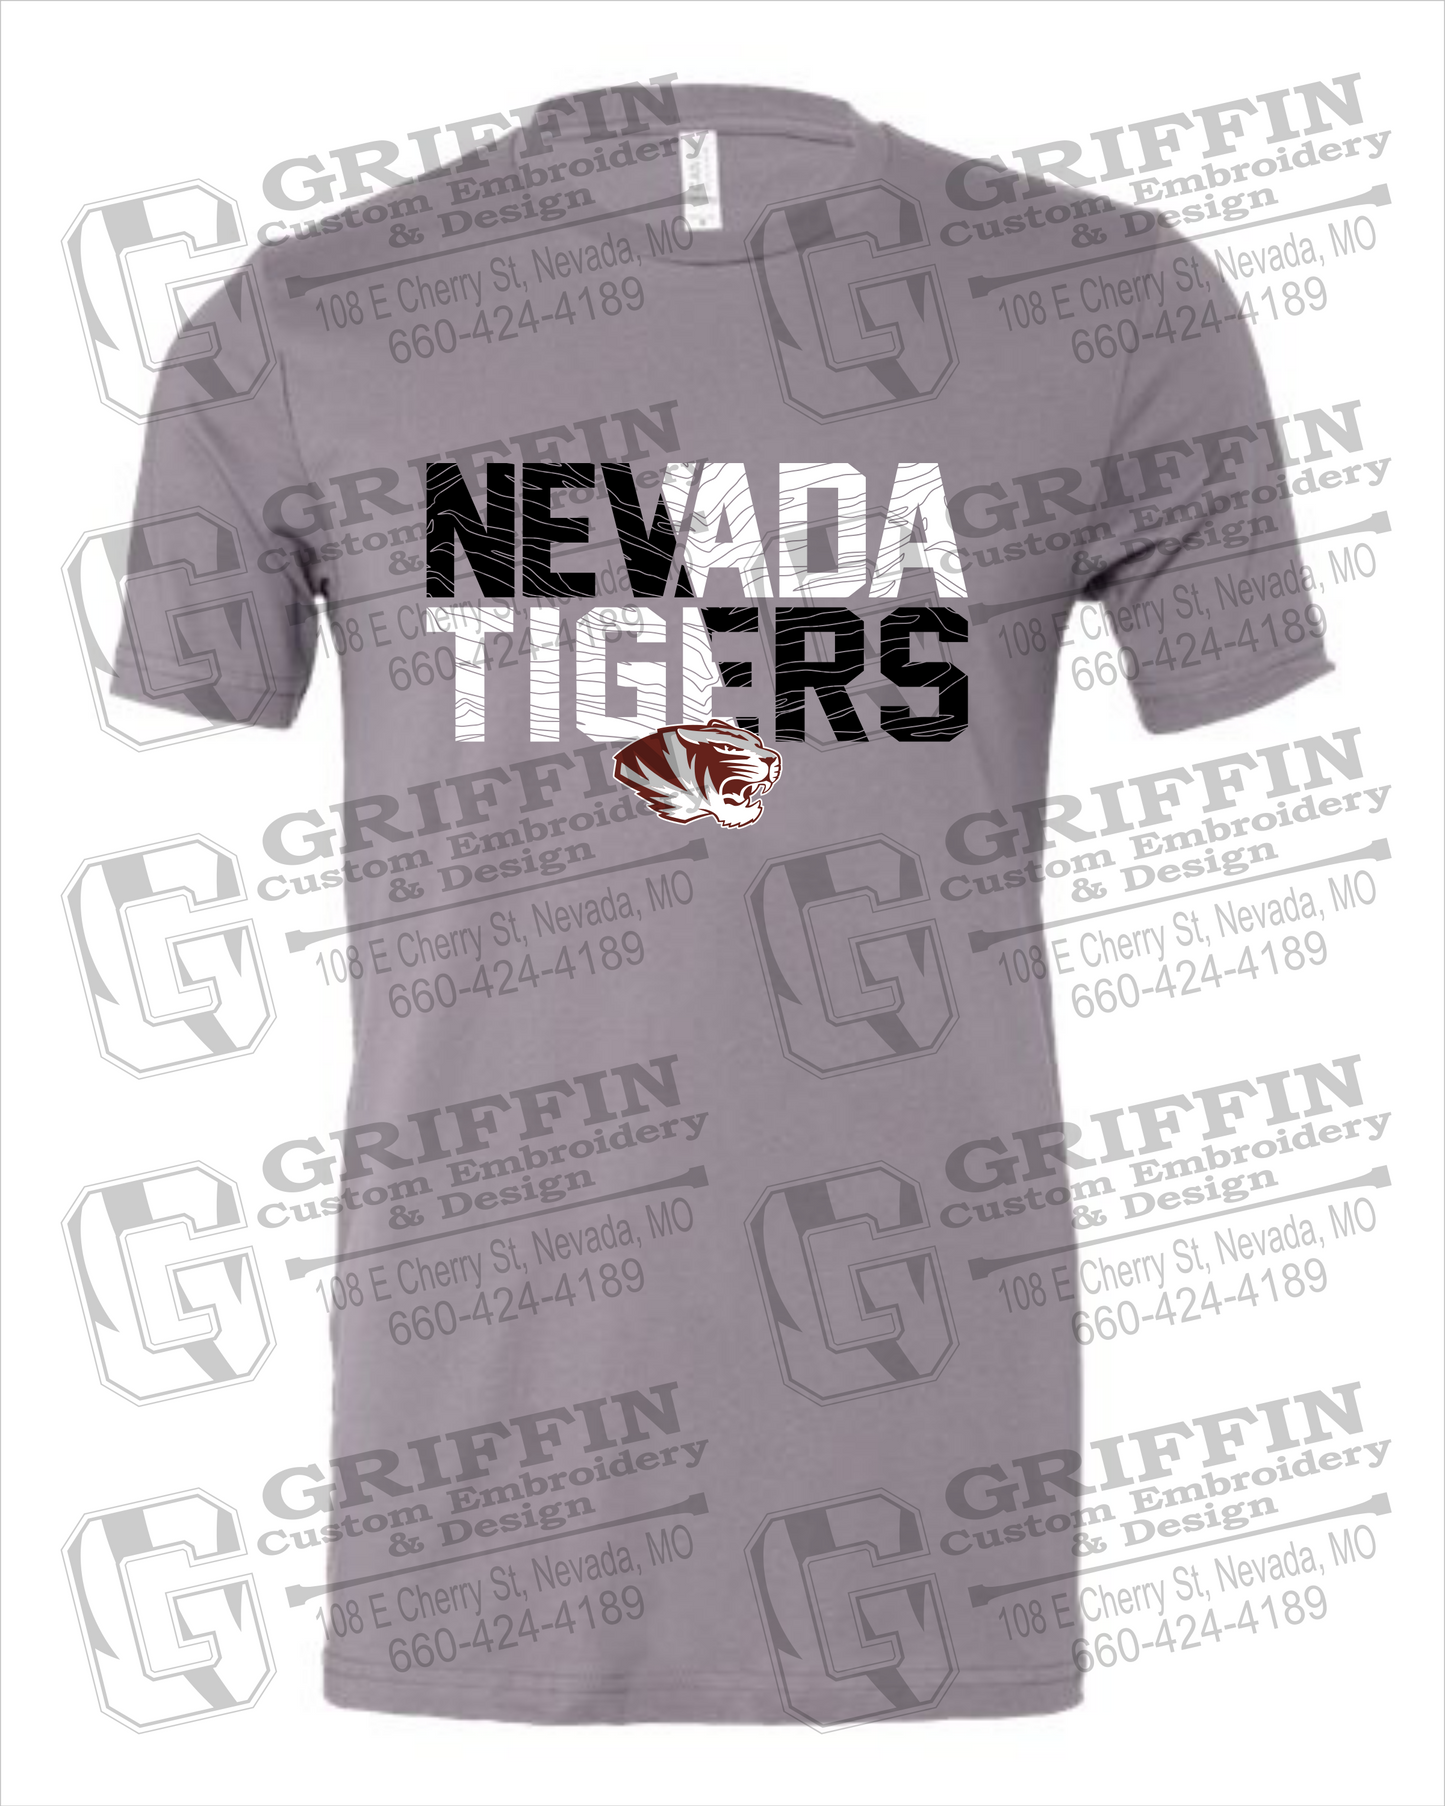 Nevada Tigers 23-L 100% Cotton Short Sleeve T-Shirt